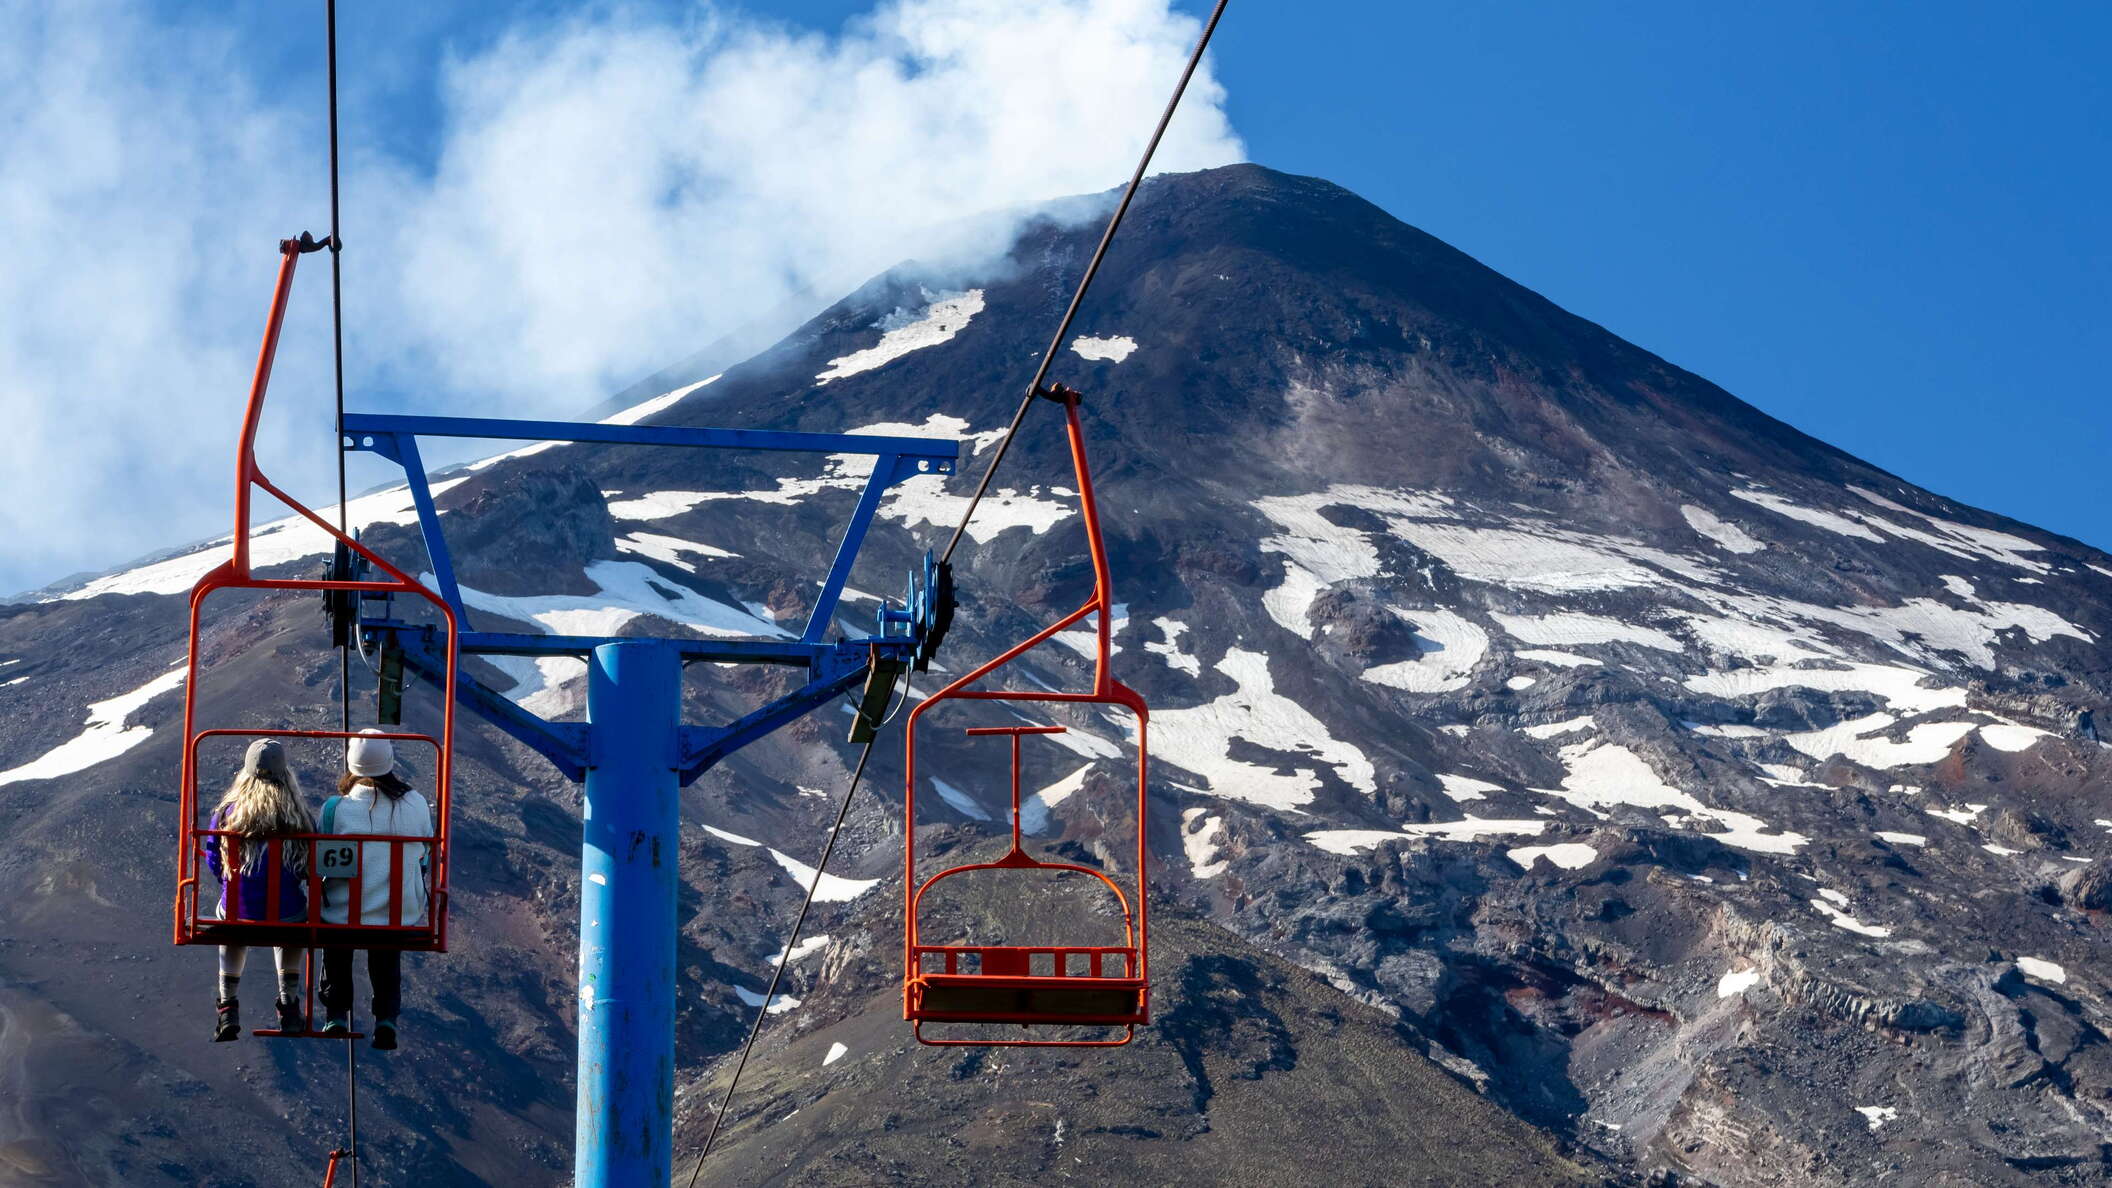 Centro de Ski Pillán | Chair lift with Volcán Villarrica